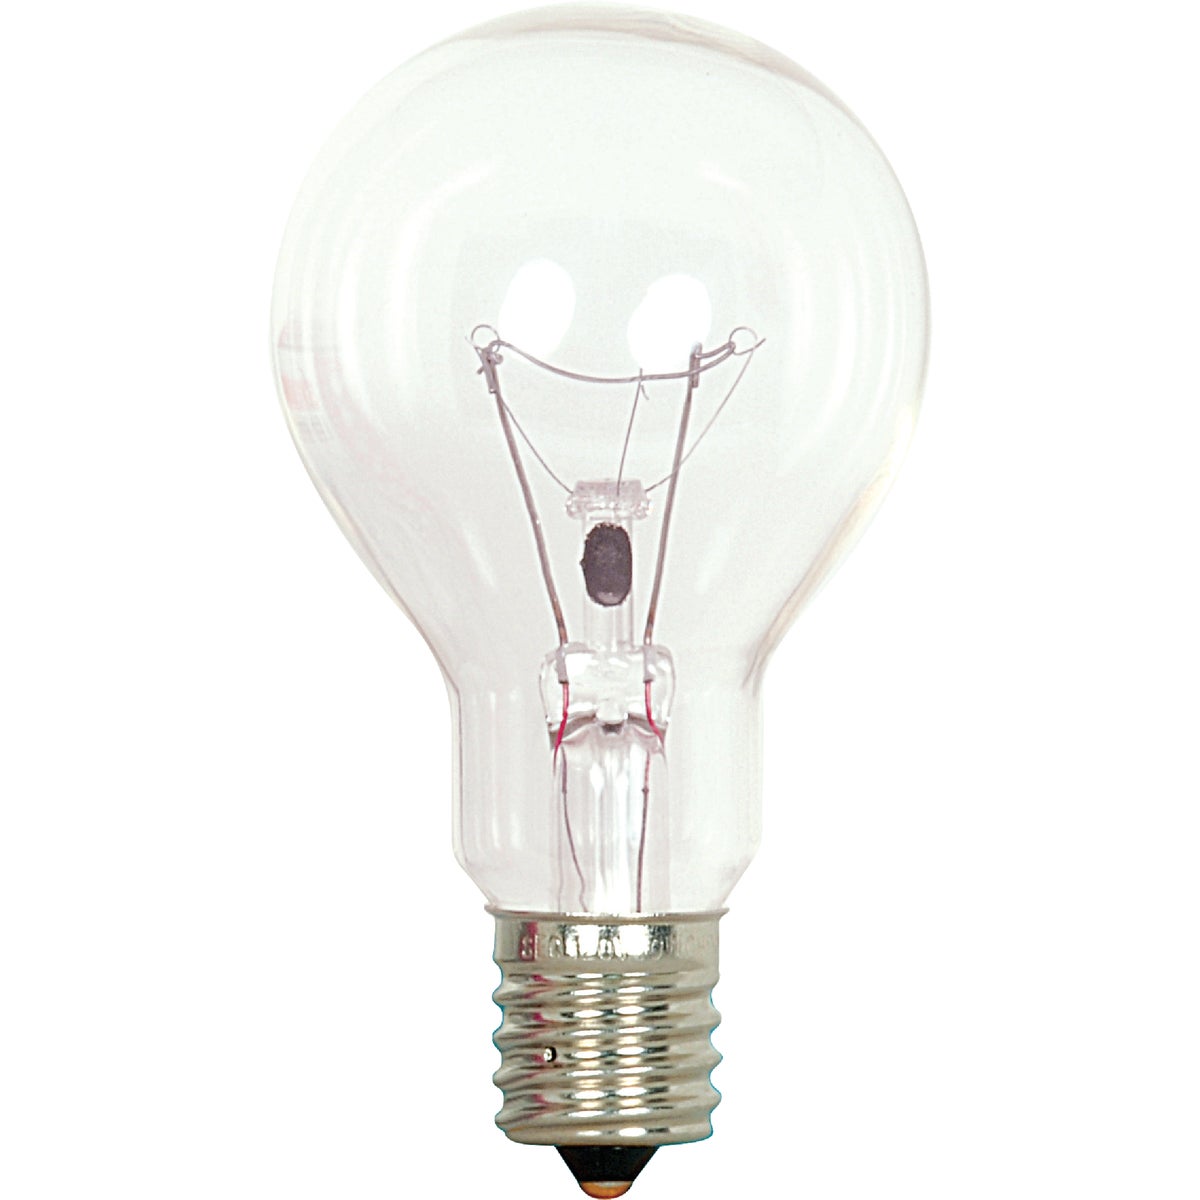 Item 519184, A15, decorative, incandescent light bulb with intermediate base.